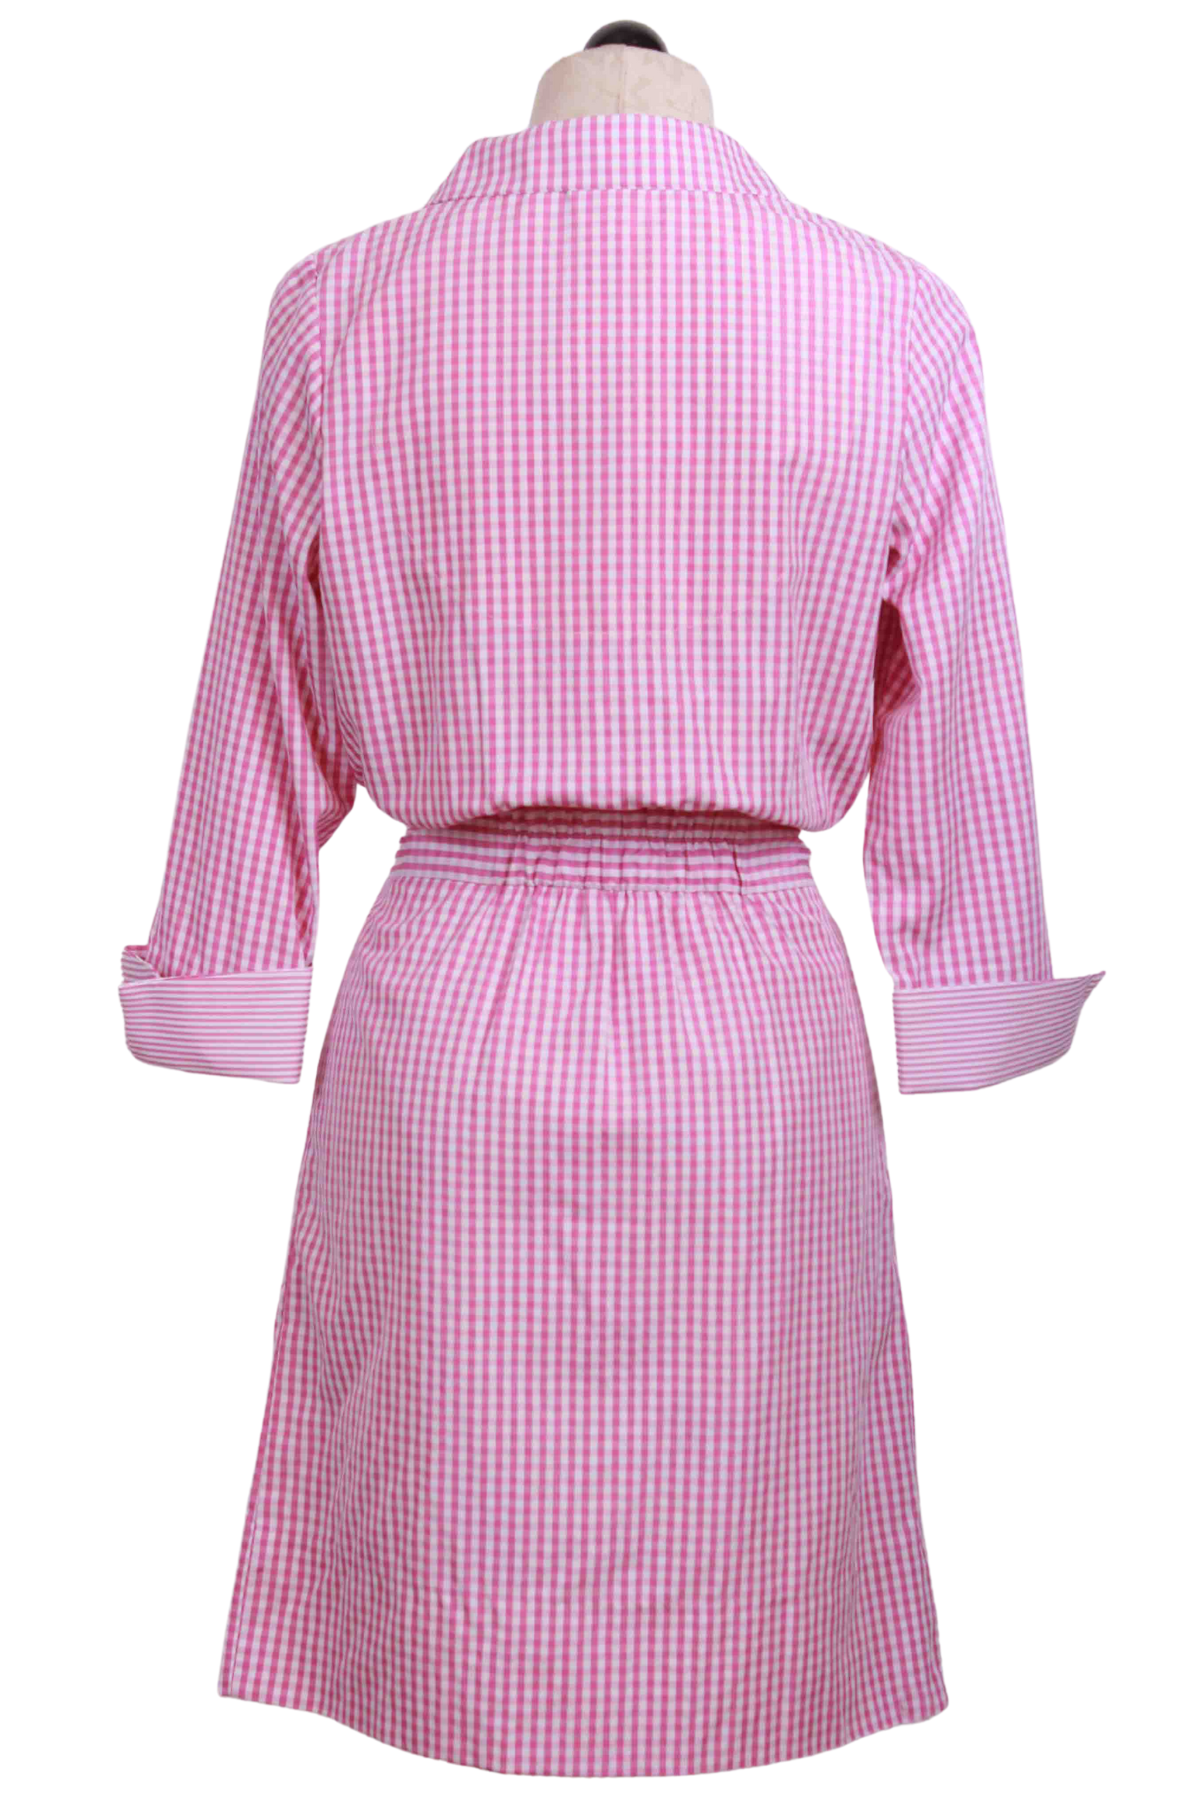 back view of Pink Gingham Breezy Blouson Dress by Gretchen Scott